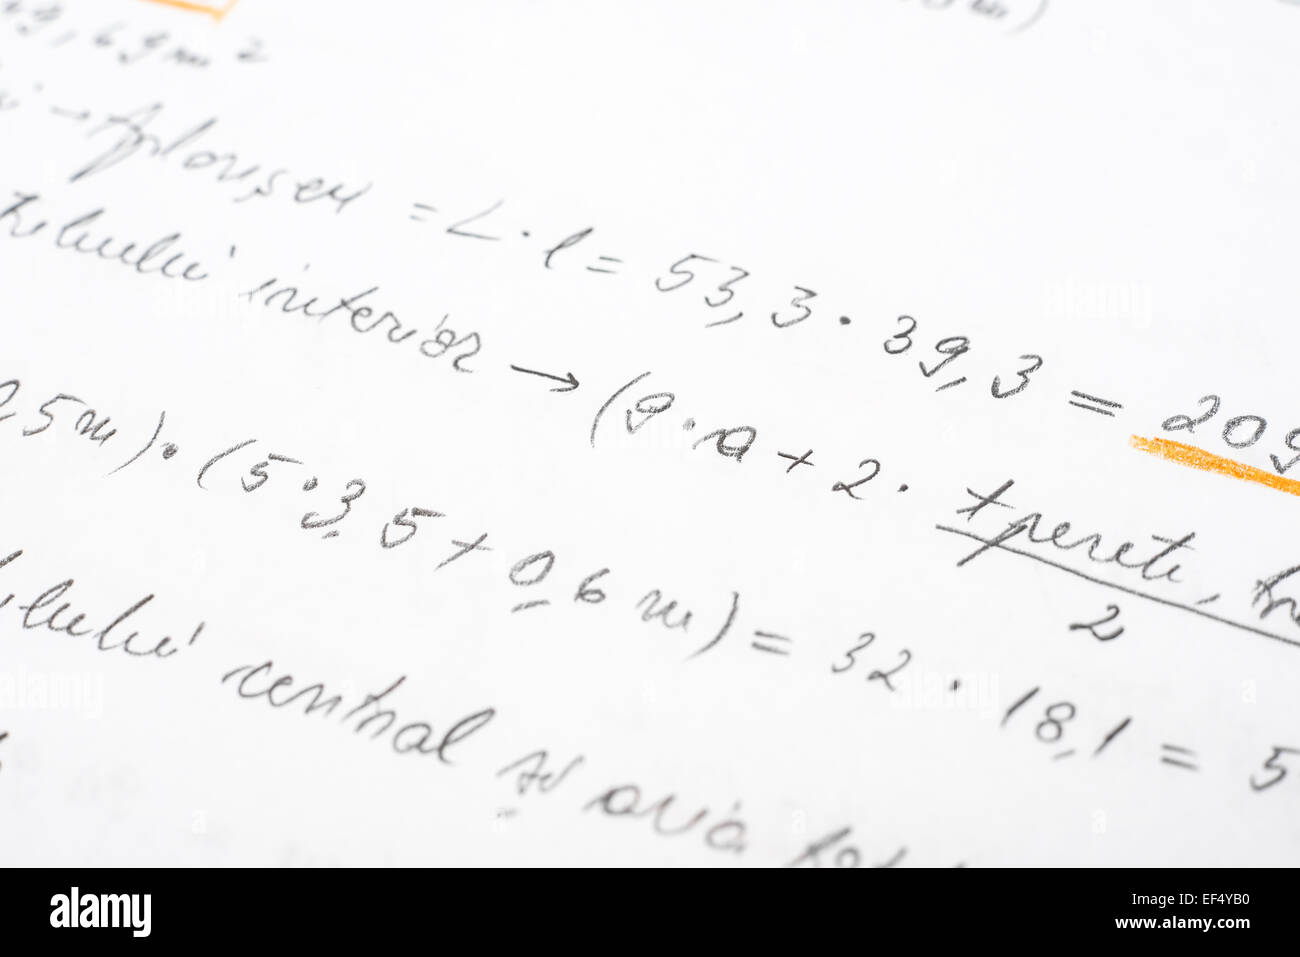 School Notebook With Handwritten Algebra Equations Stock Photo